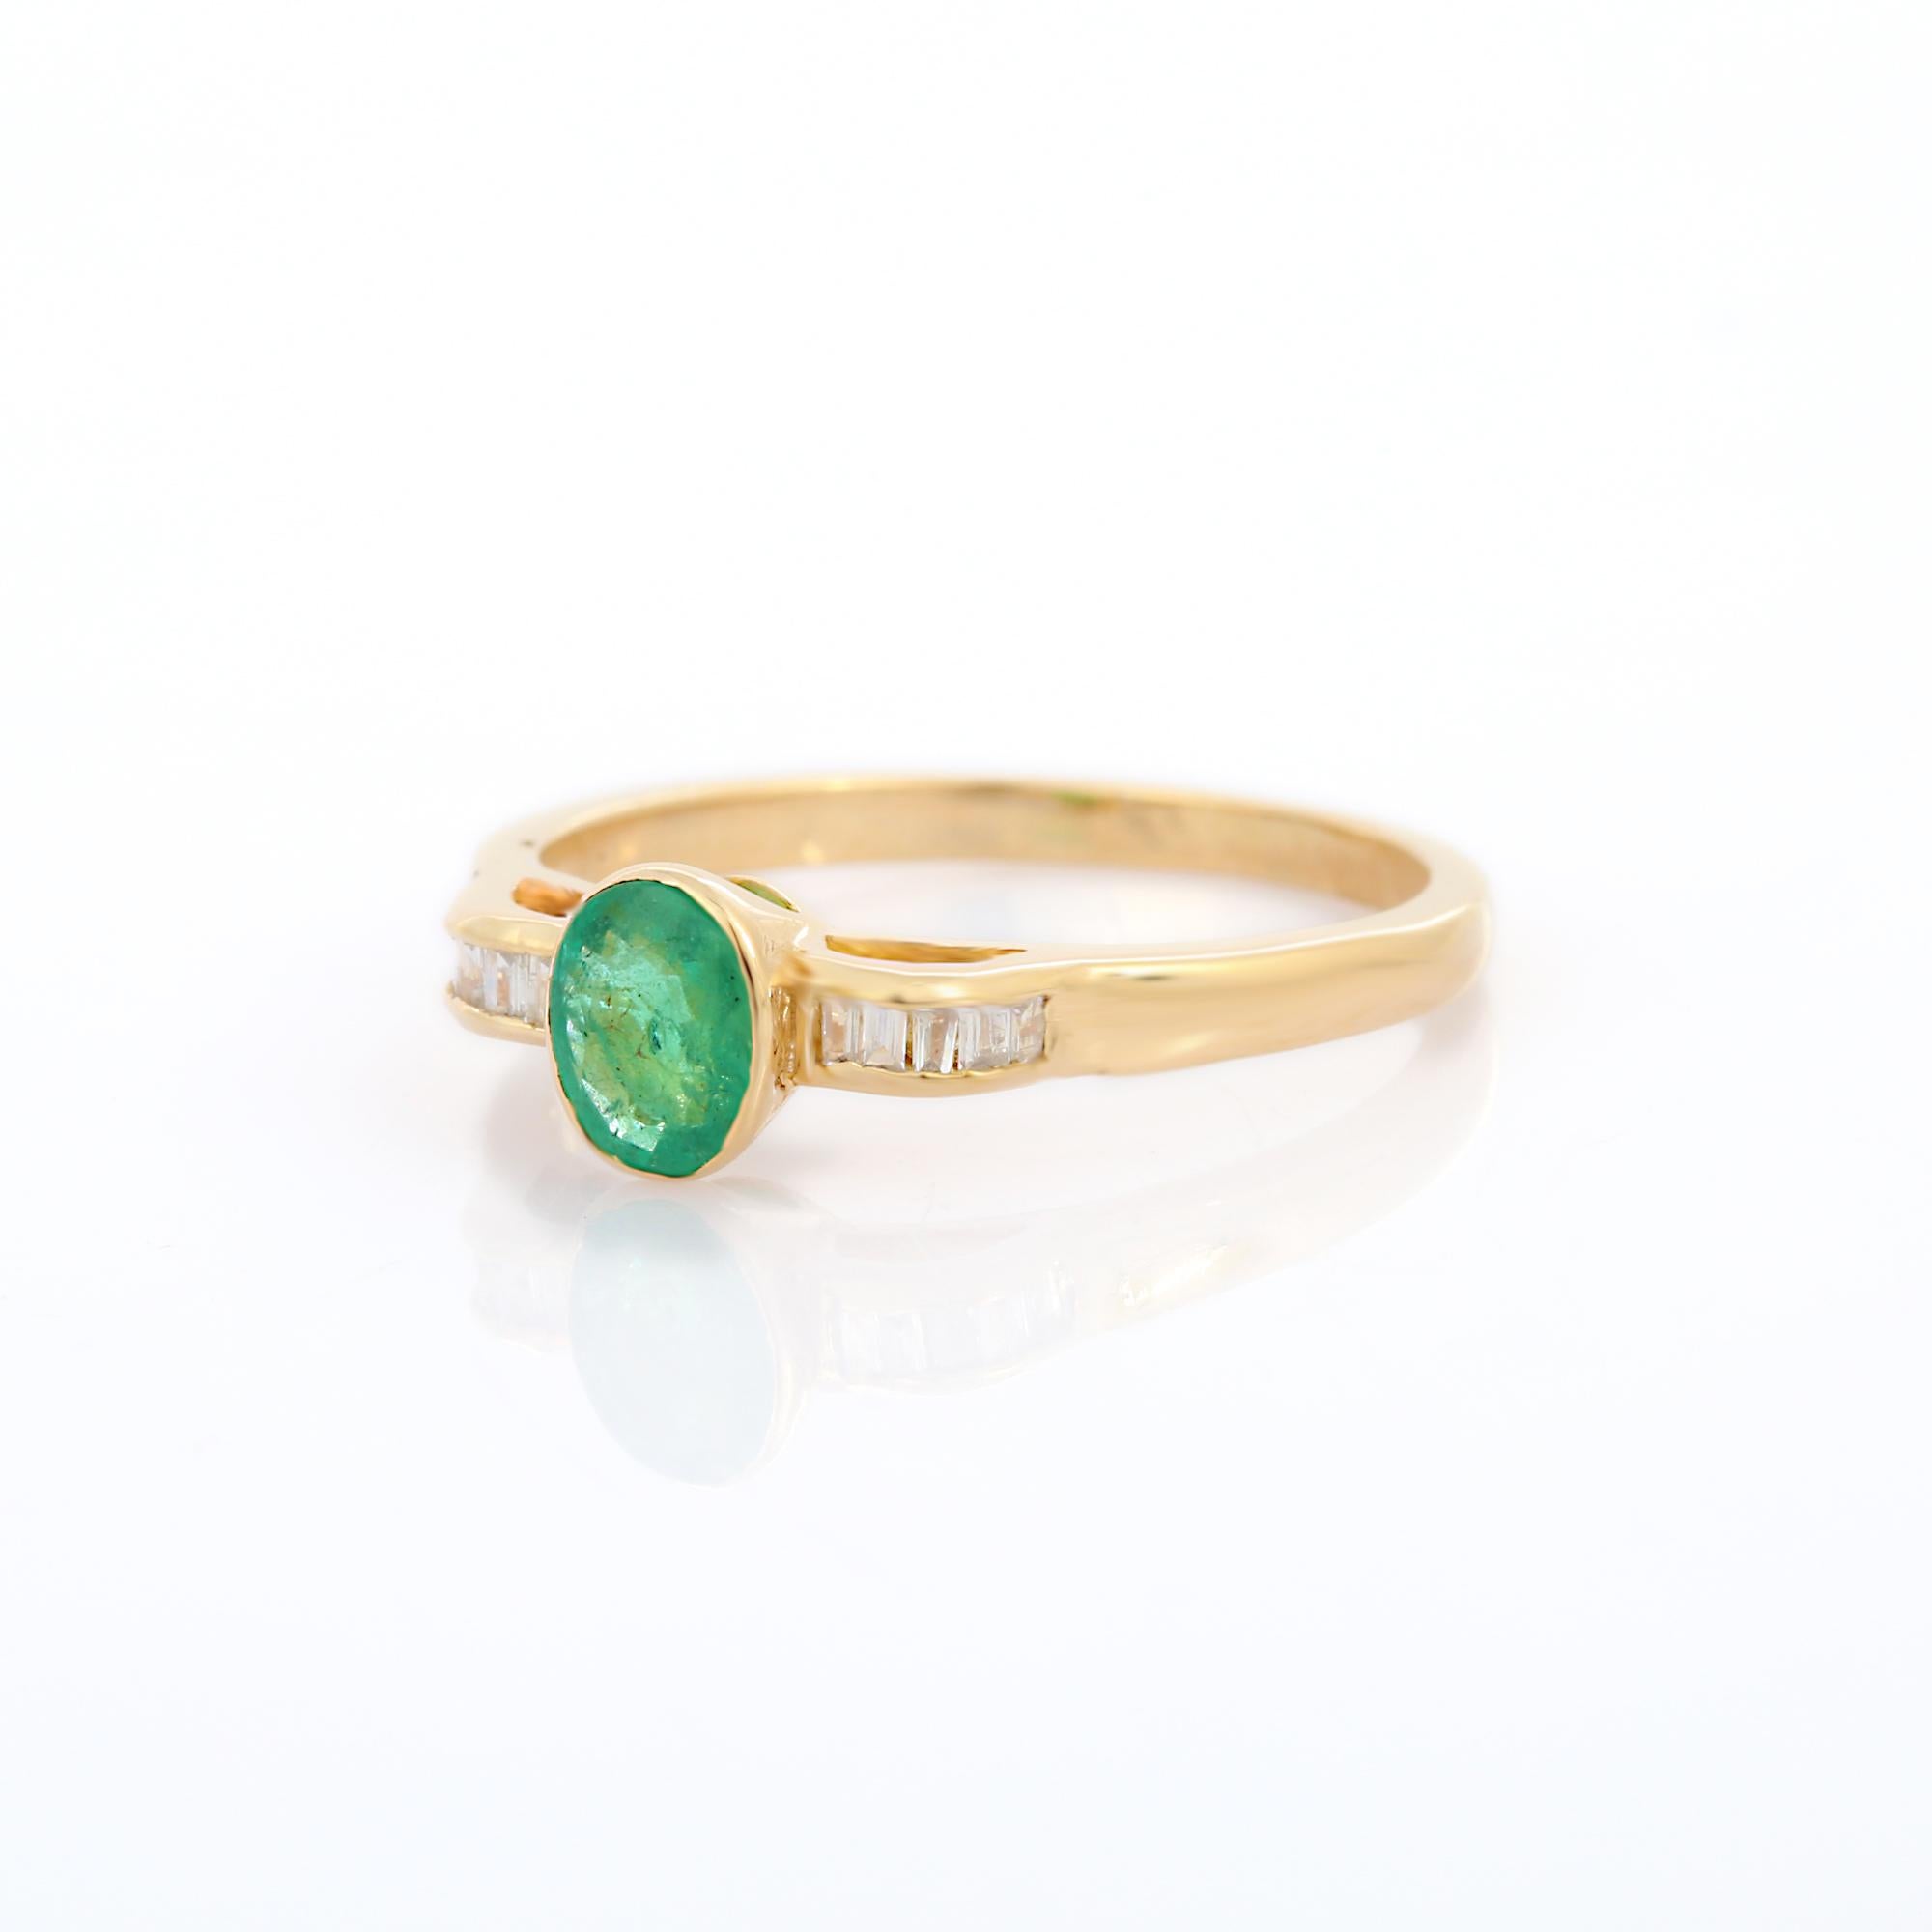 For Sale:  Minimalist 18k Solid Yellow Gold Emerald Diamond Ring 2